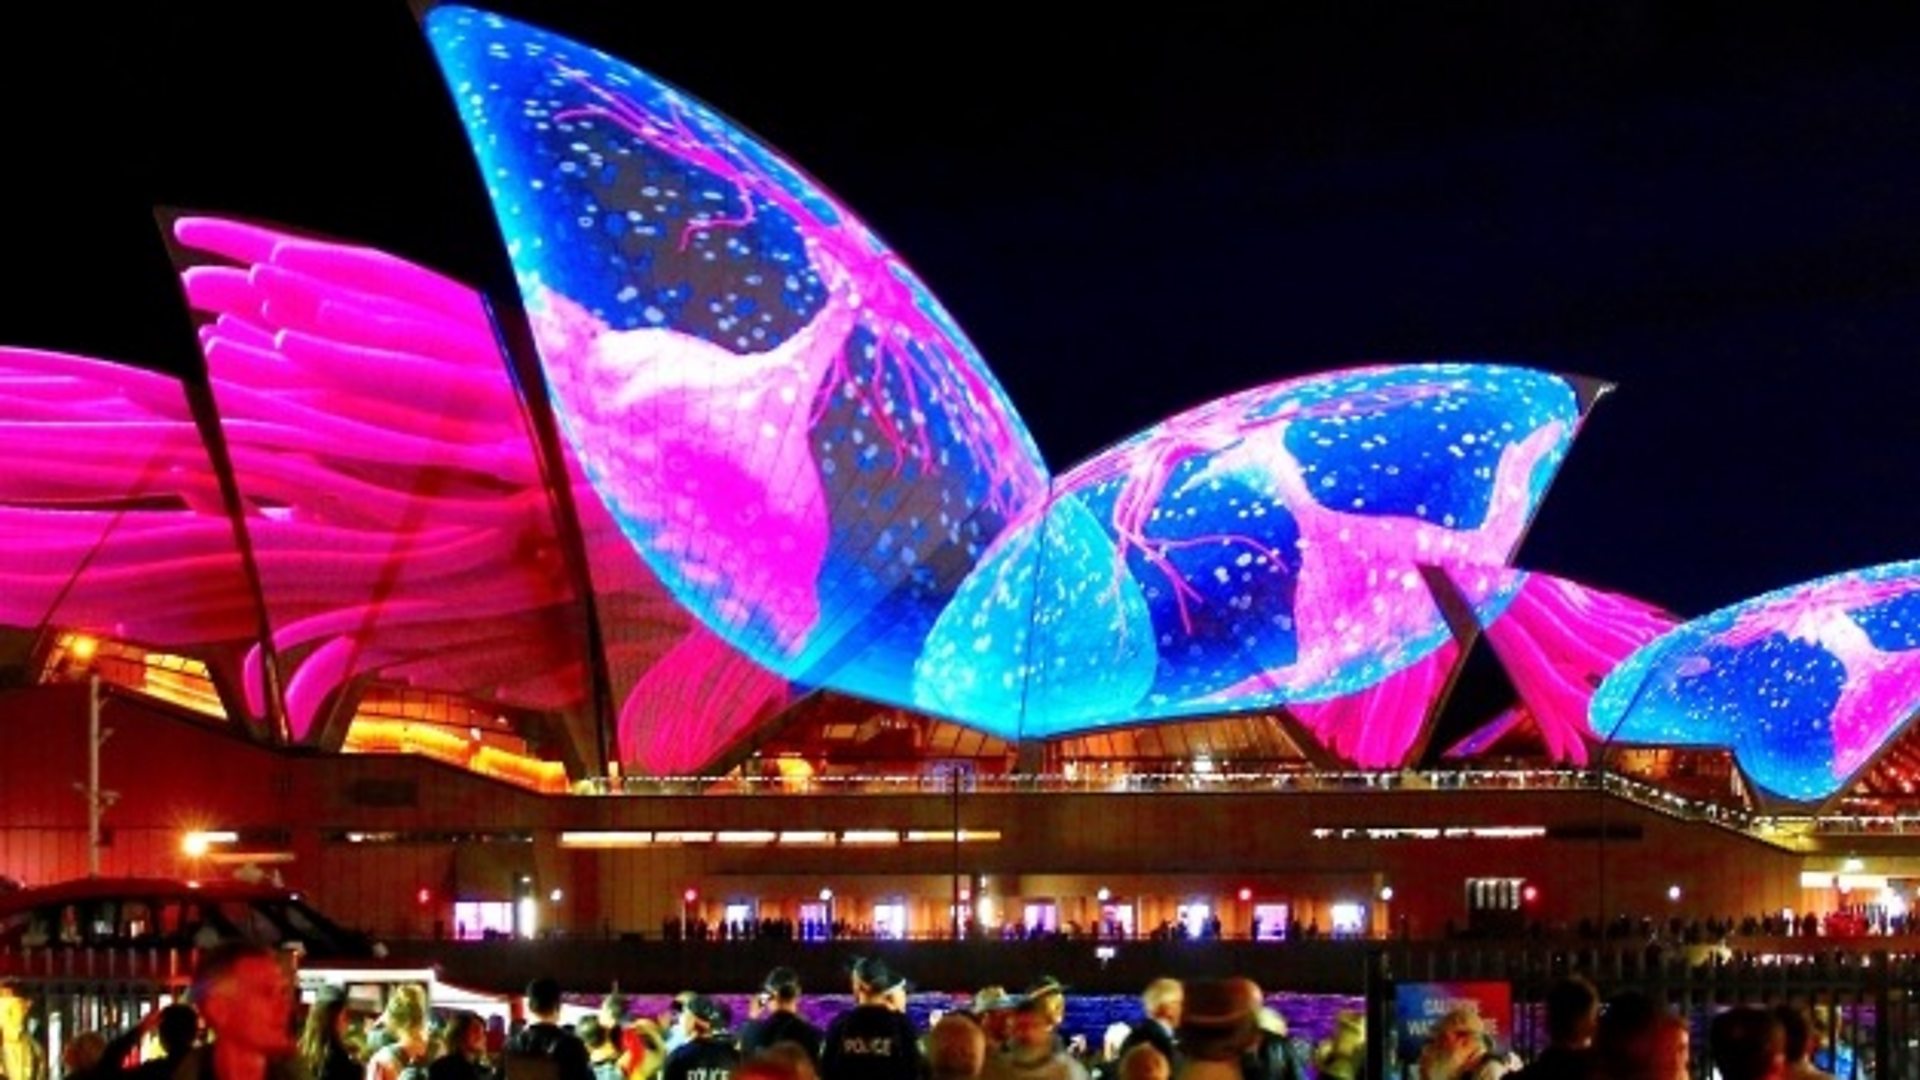 Light festival dazzles visitors in Sydney - BBC News